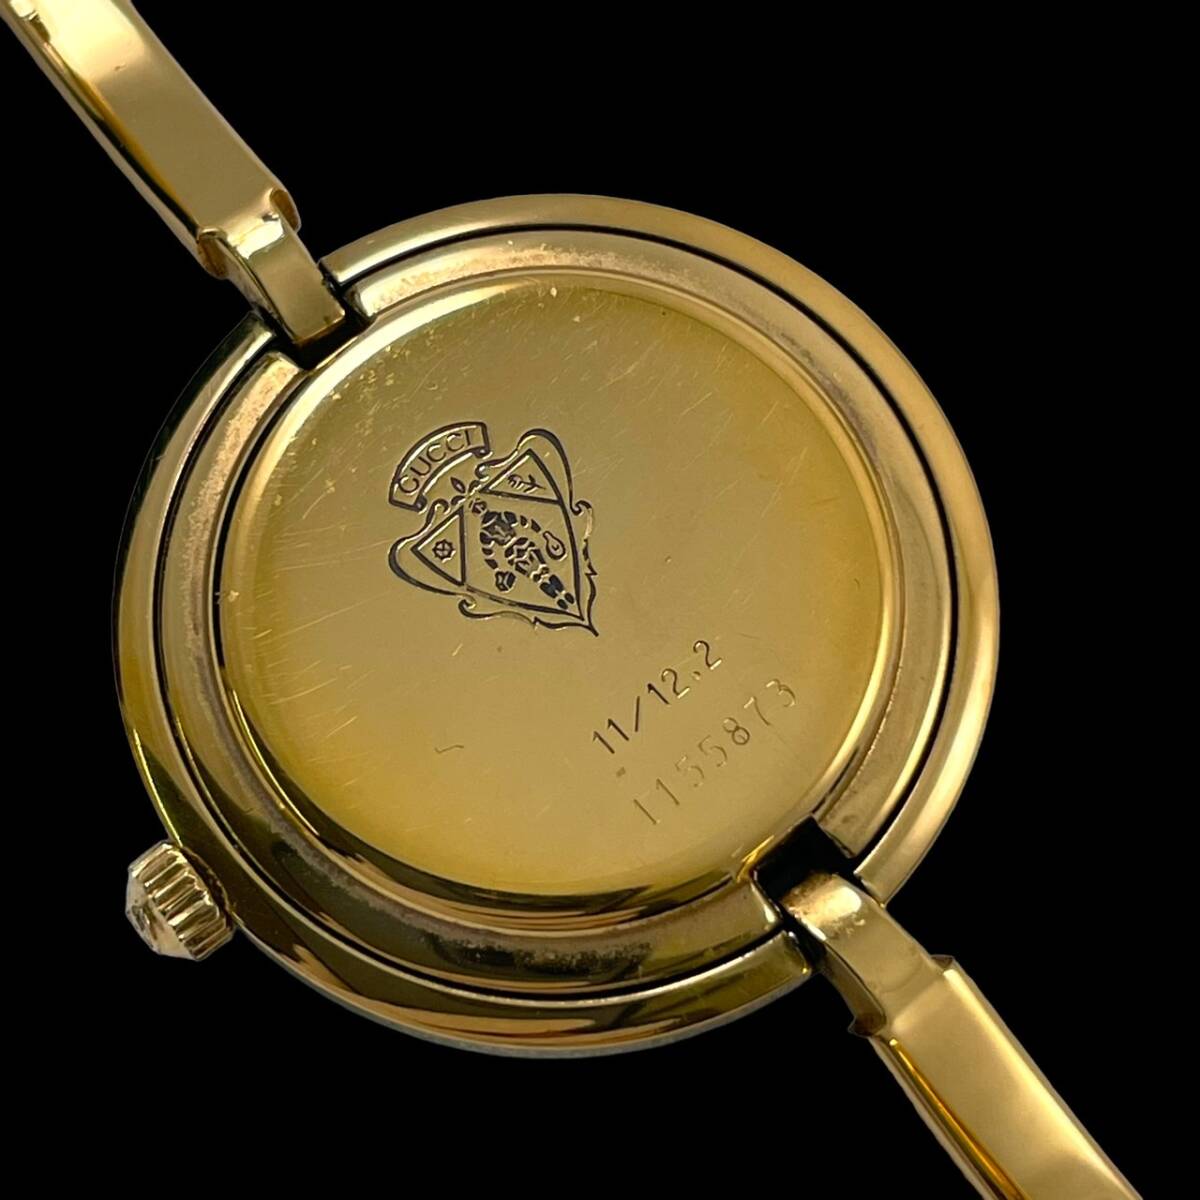 24F040 Gucci GUCCI 11/12.2 перемена оправа женские наручные часы рабочий товар кварц браслет часы белый циферблат 2 стрелки 1 иен ~